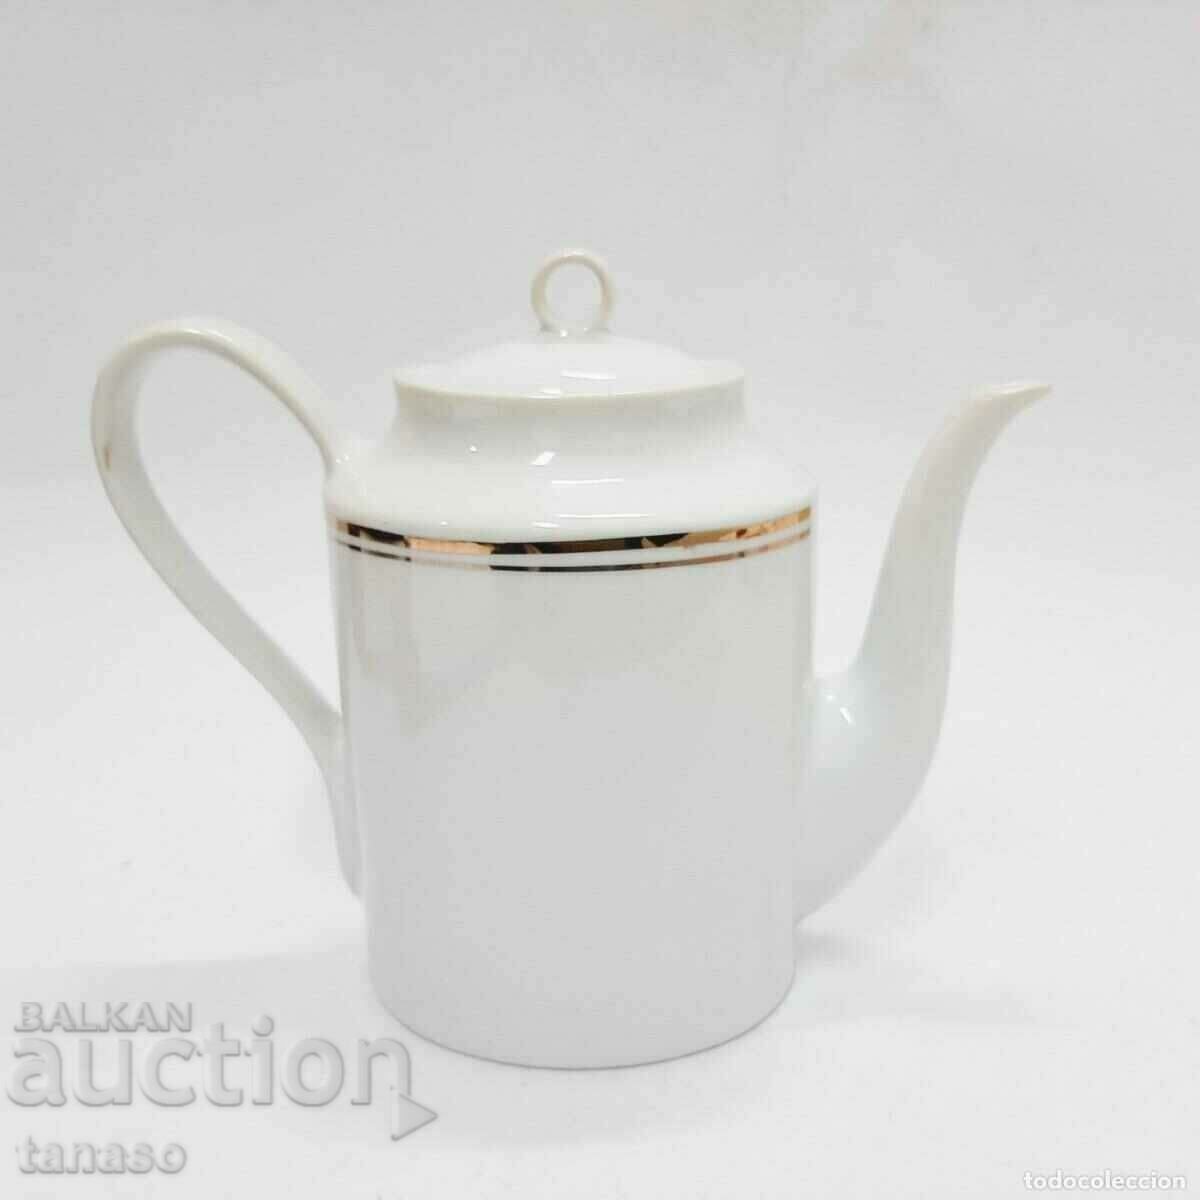 Old Bulgarian porcelain tea/coffee pot, kettle (12.3)